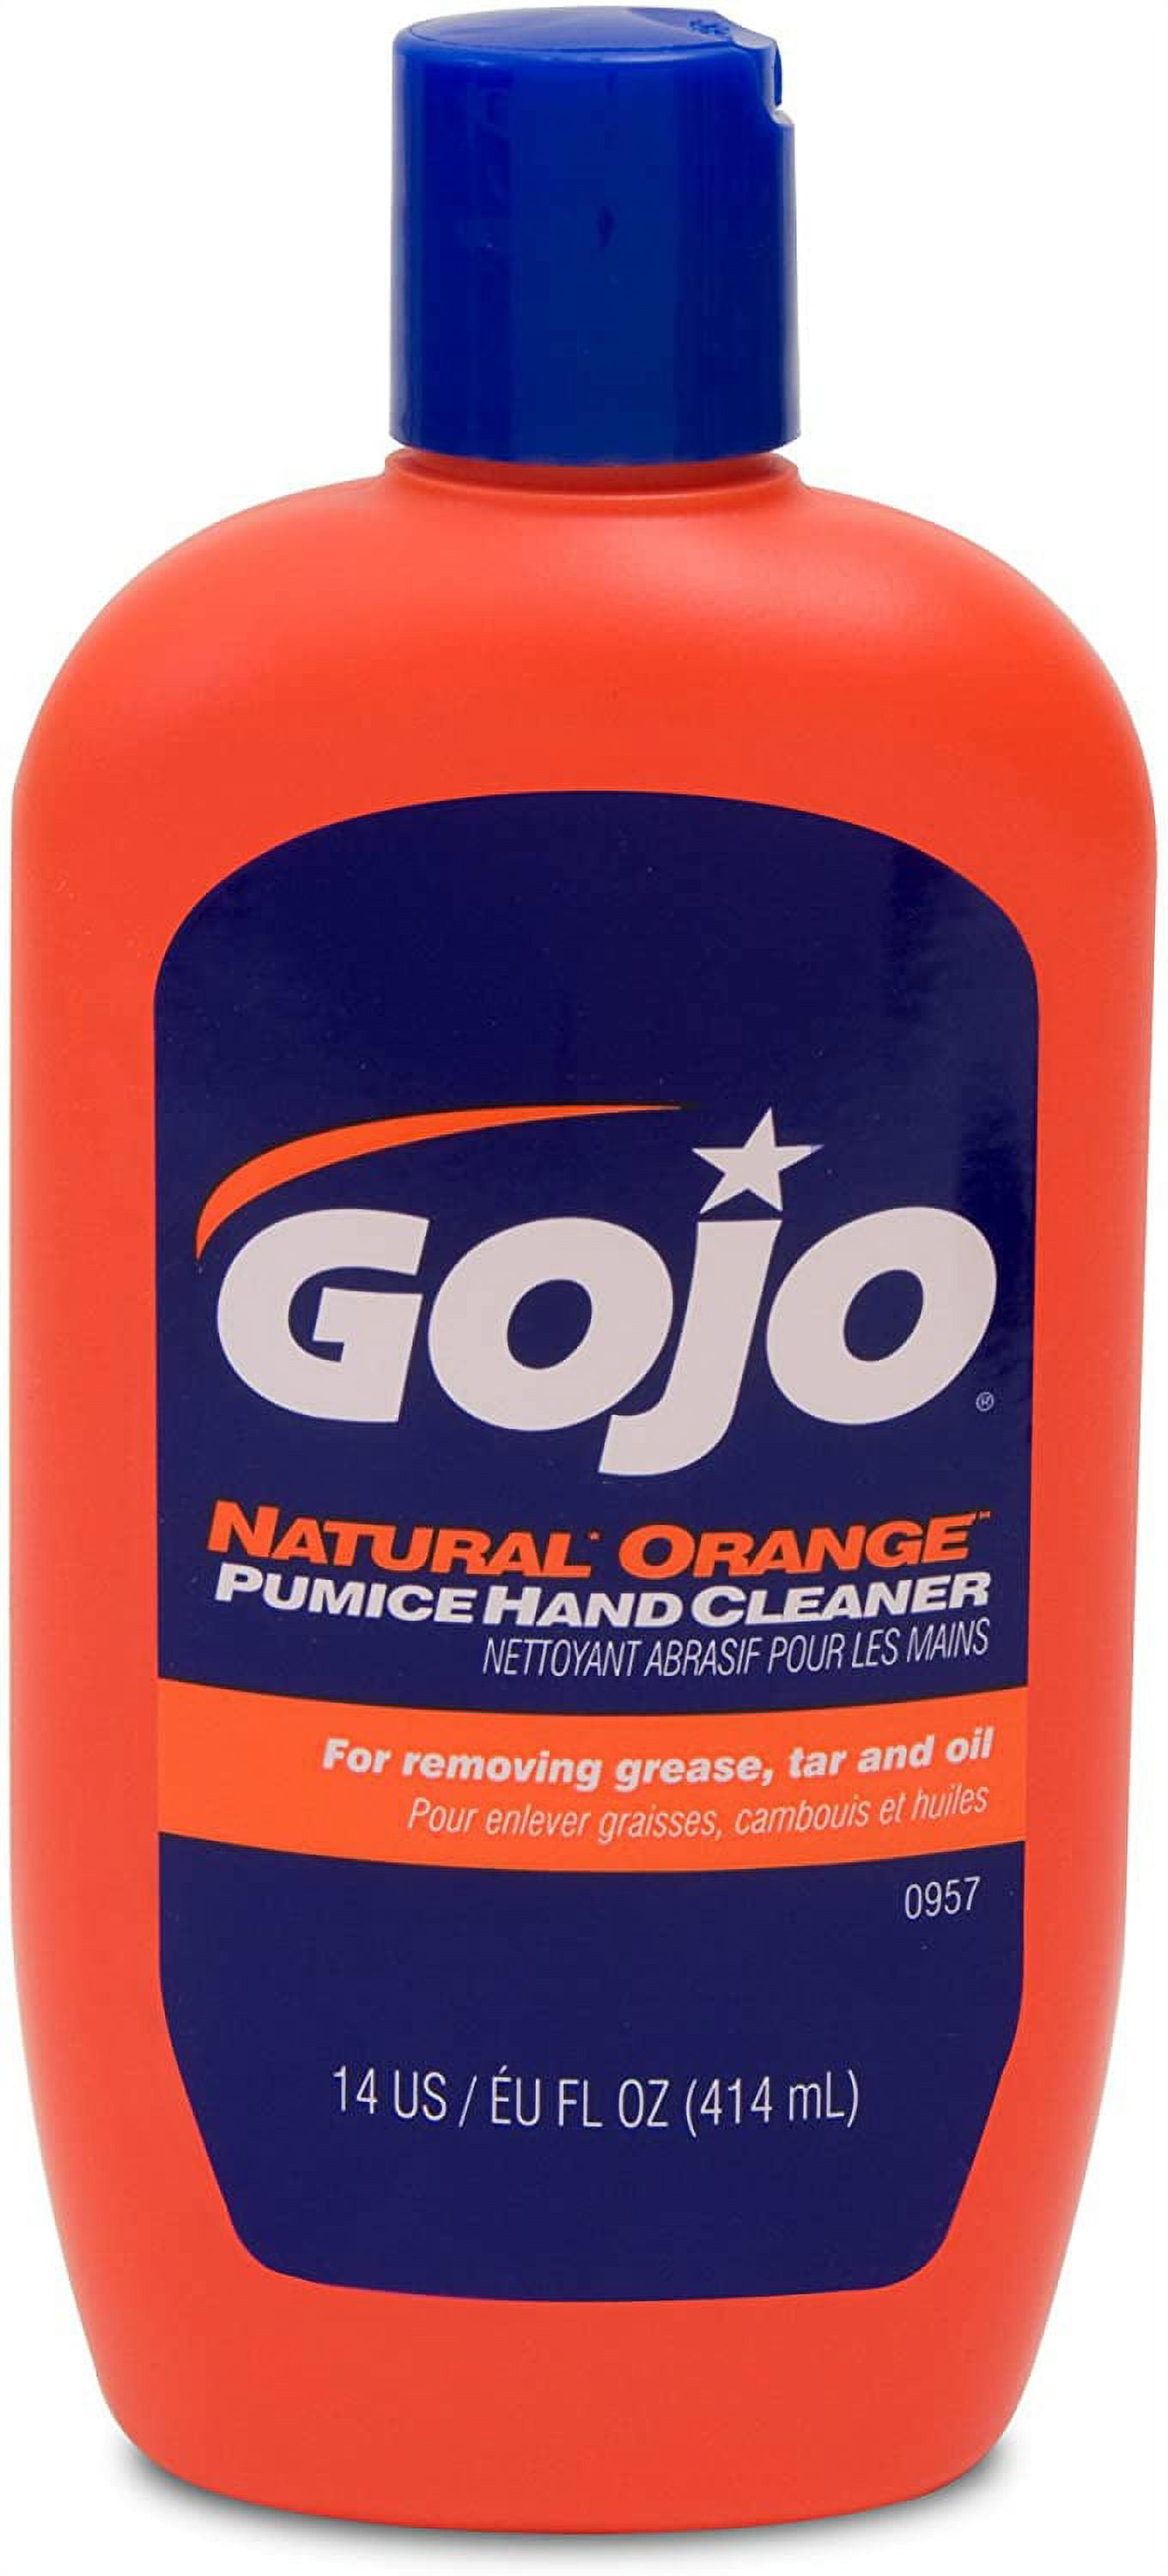 GOJO NATURAL ORANGE Pumice Hand Cleaner, Citrus, 14 oz Bottle, 12/Carton  (095712CT)